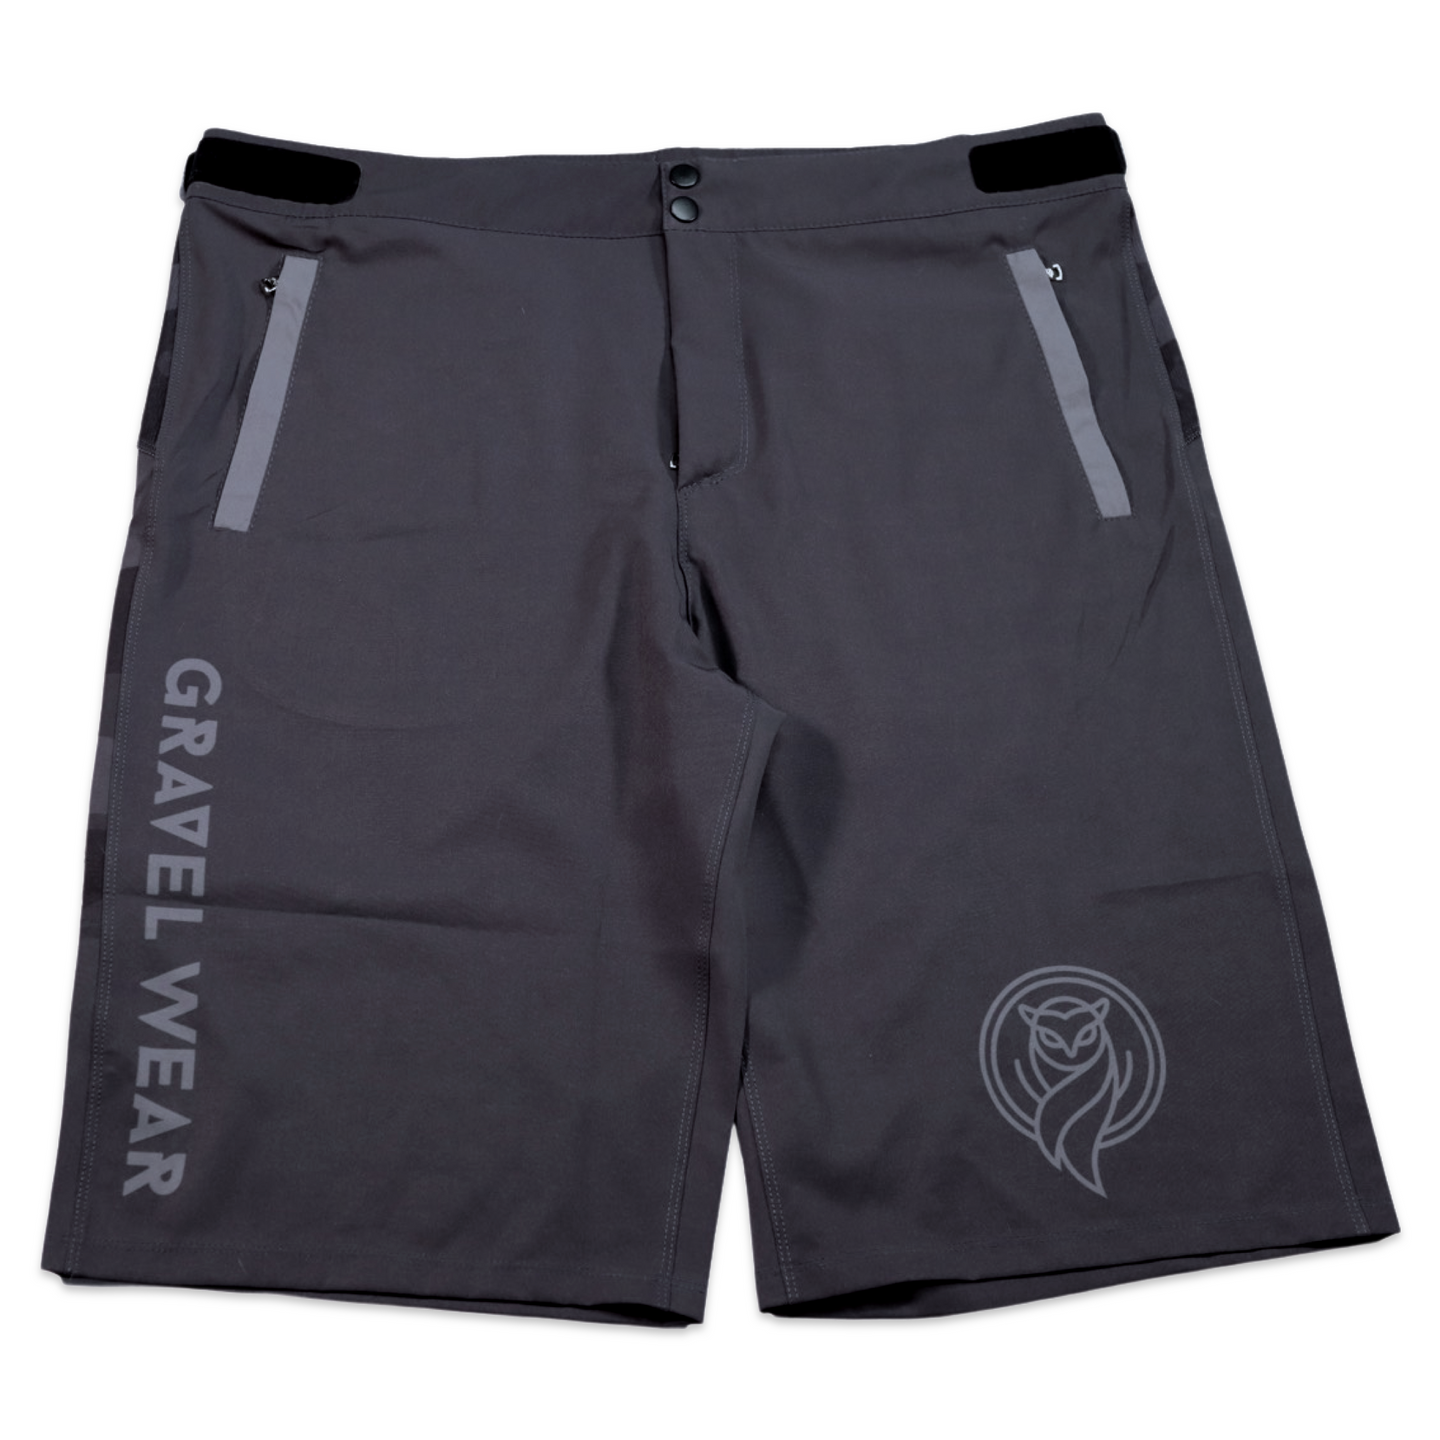 Gravel Ride Shorts Gray Camo front with logo design